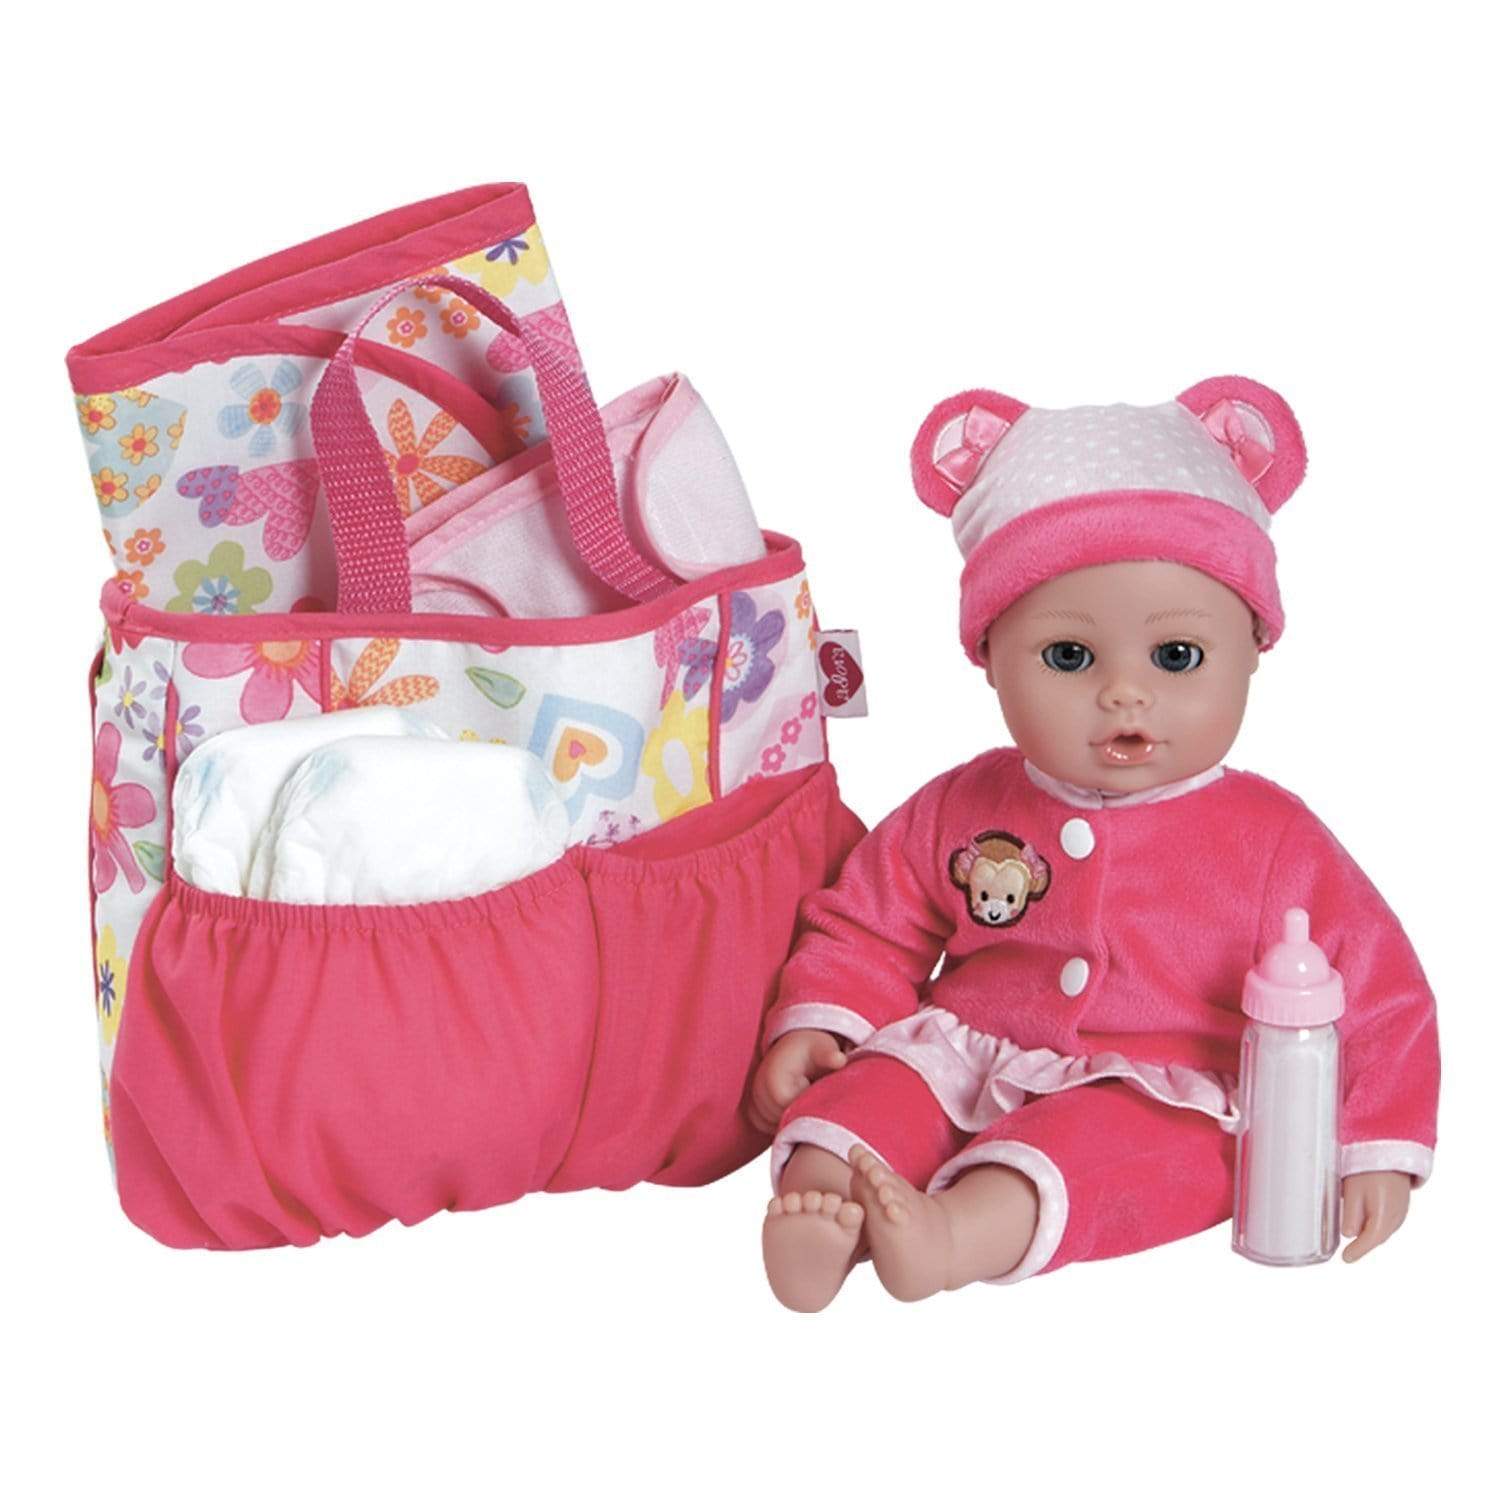 Adora Baby Diaper Bag in Fun Pink Floral Adora